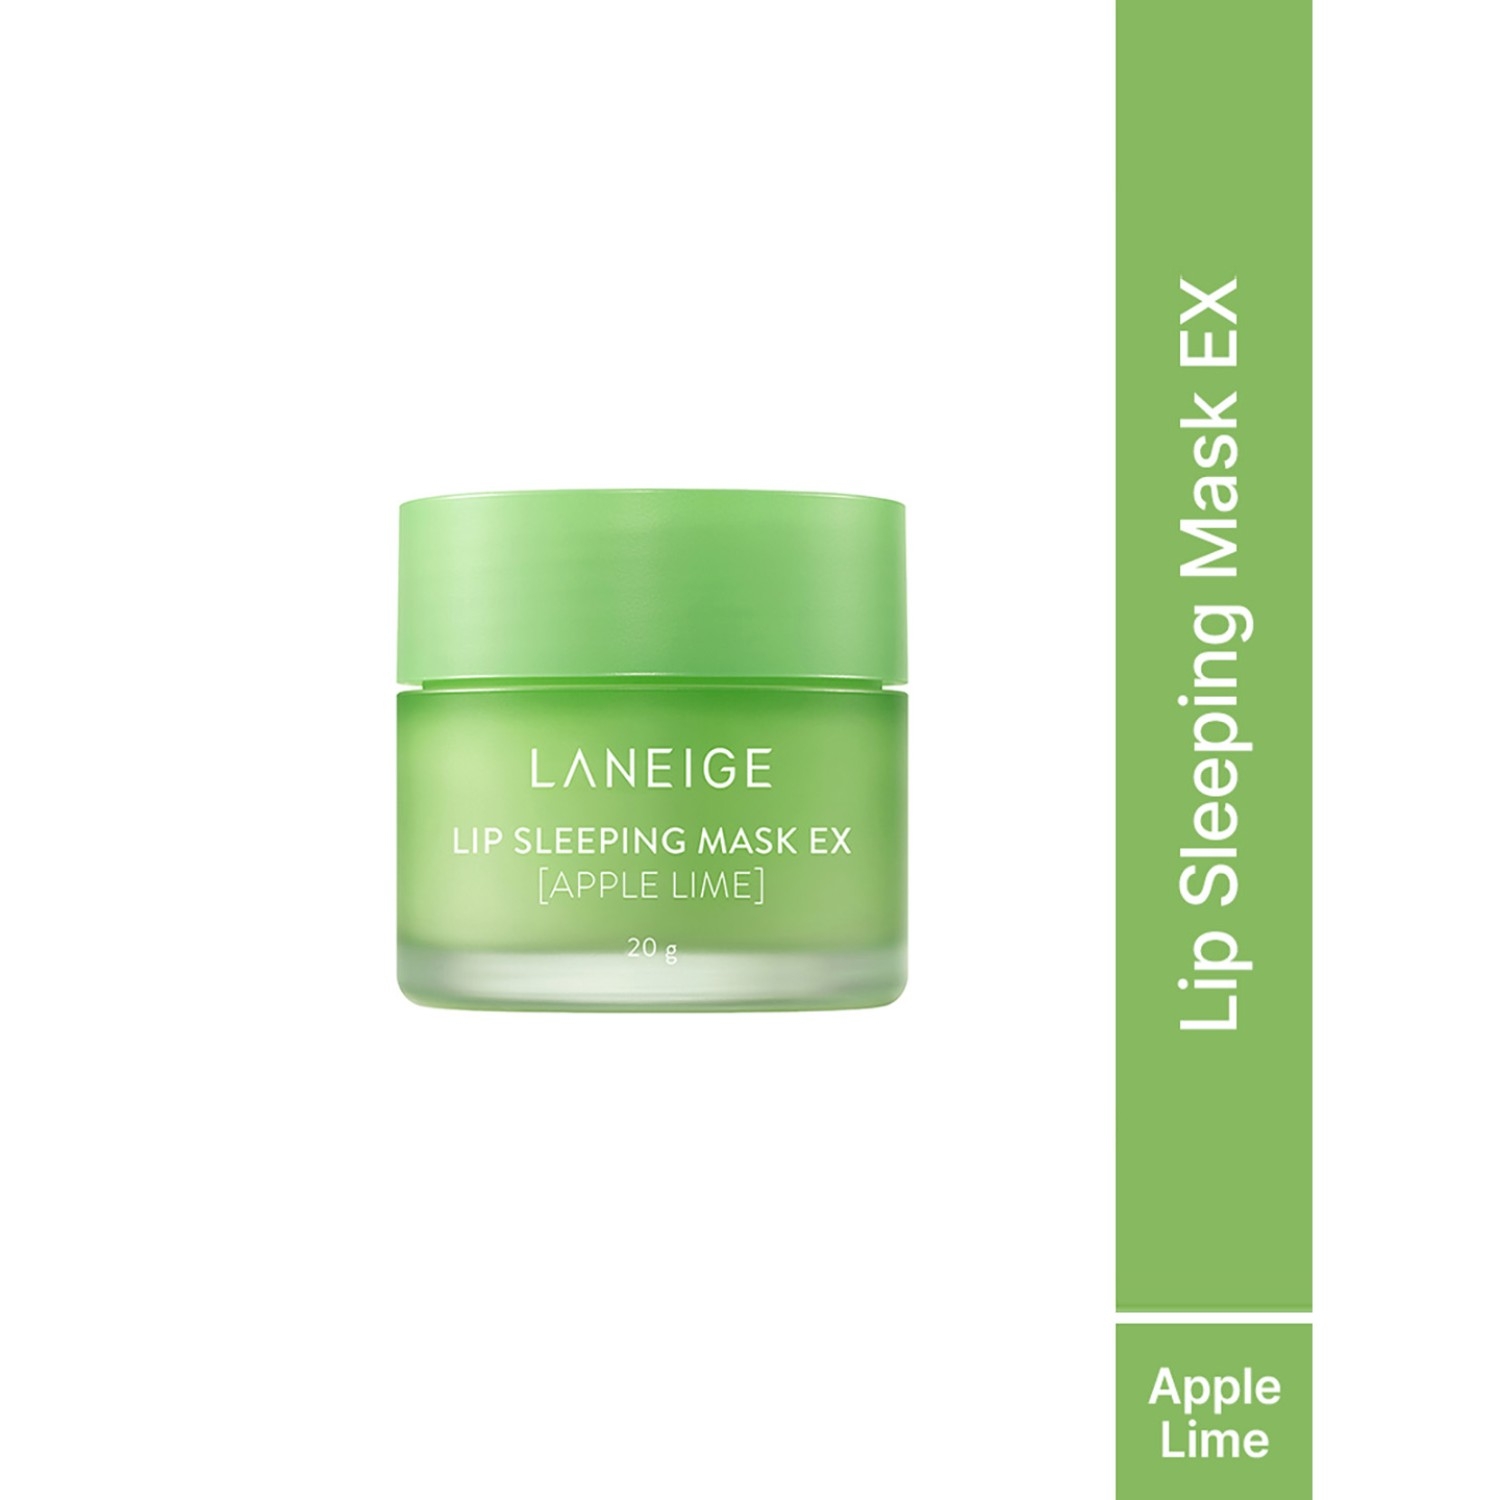 Laneige | Laneige Apple Lime Lip Sleeping Mask Ex (20g)